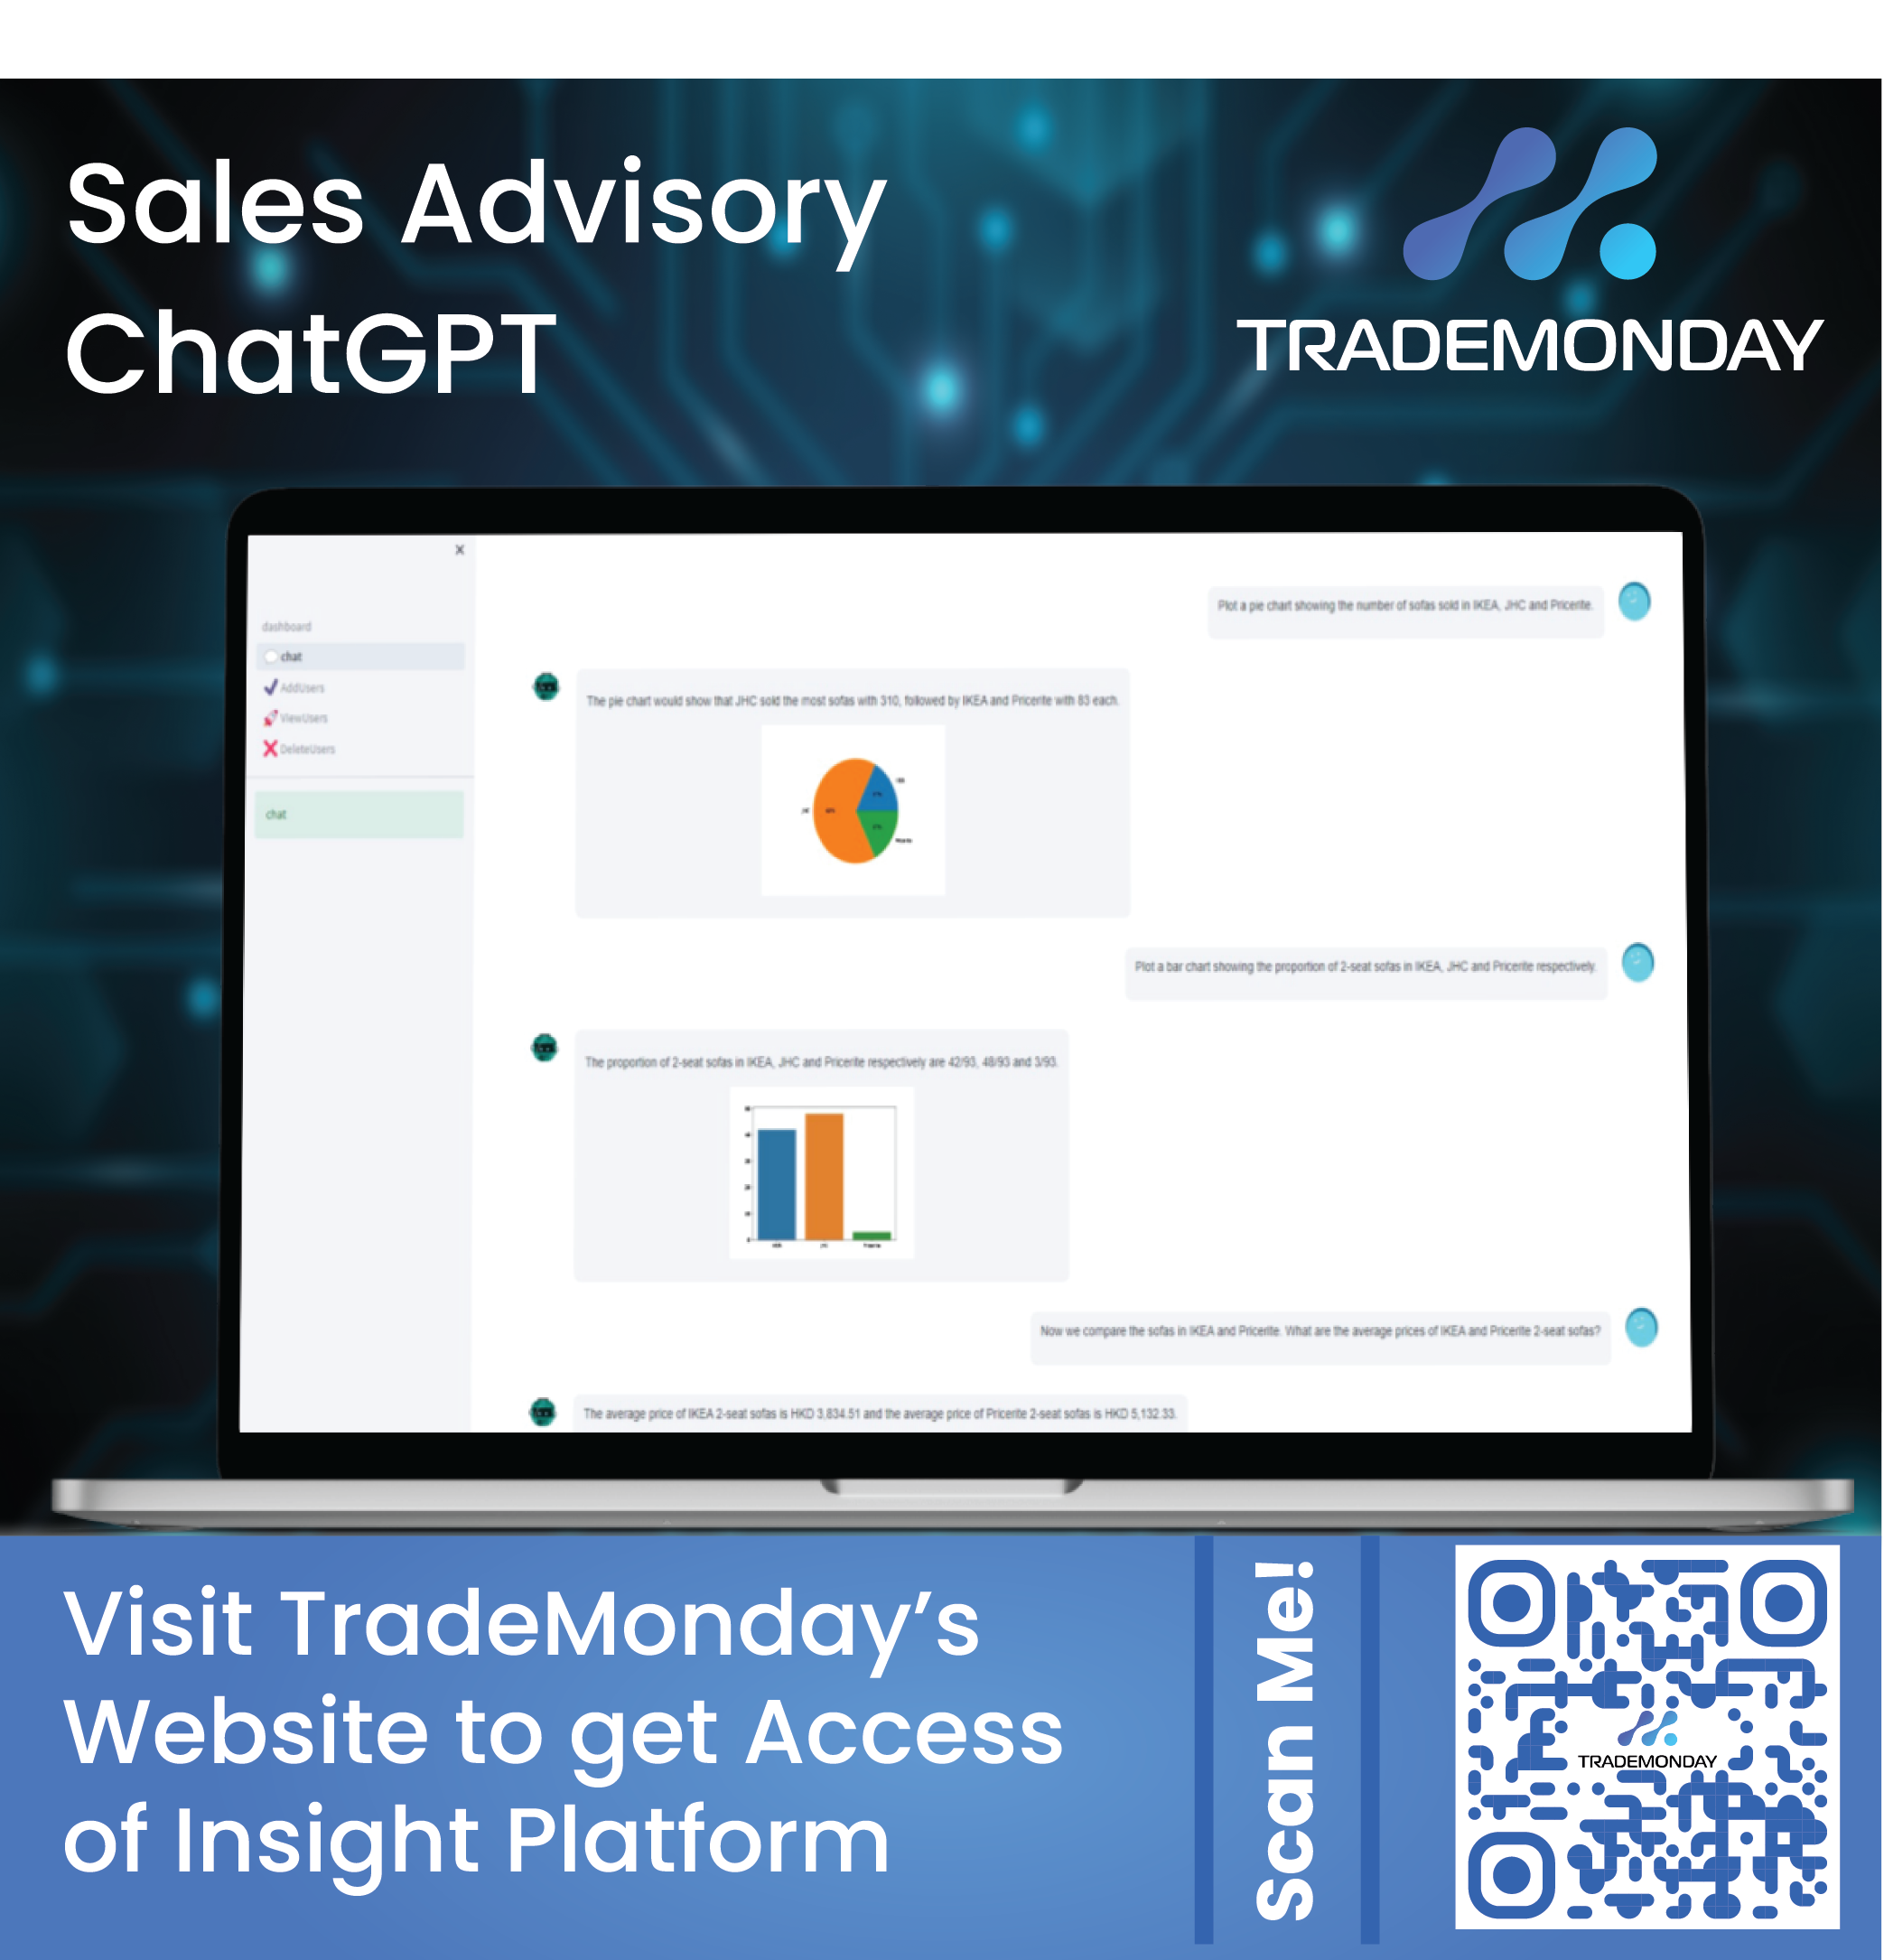 Sales Advisory ChatGPT